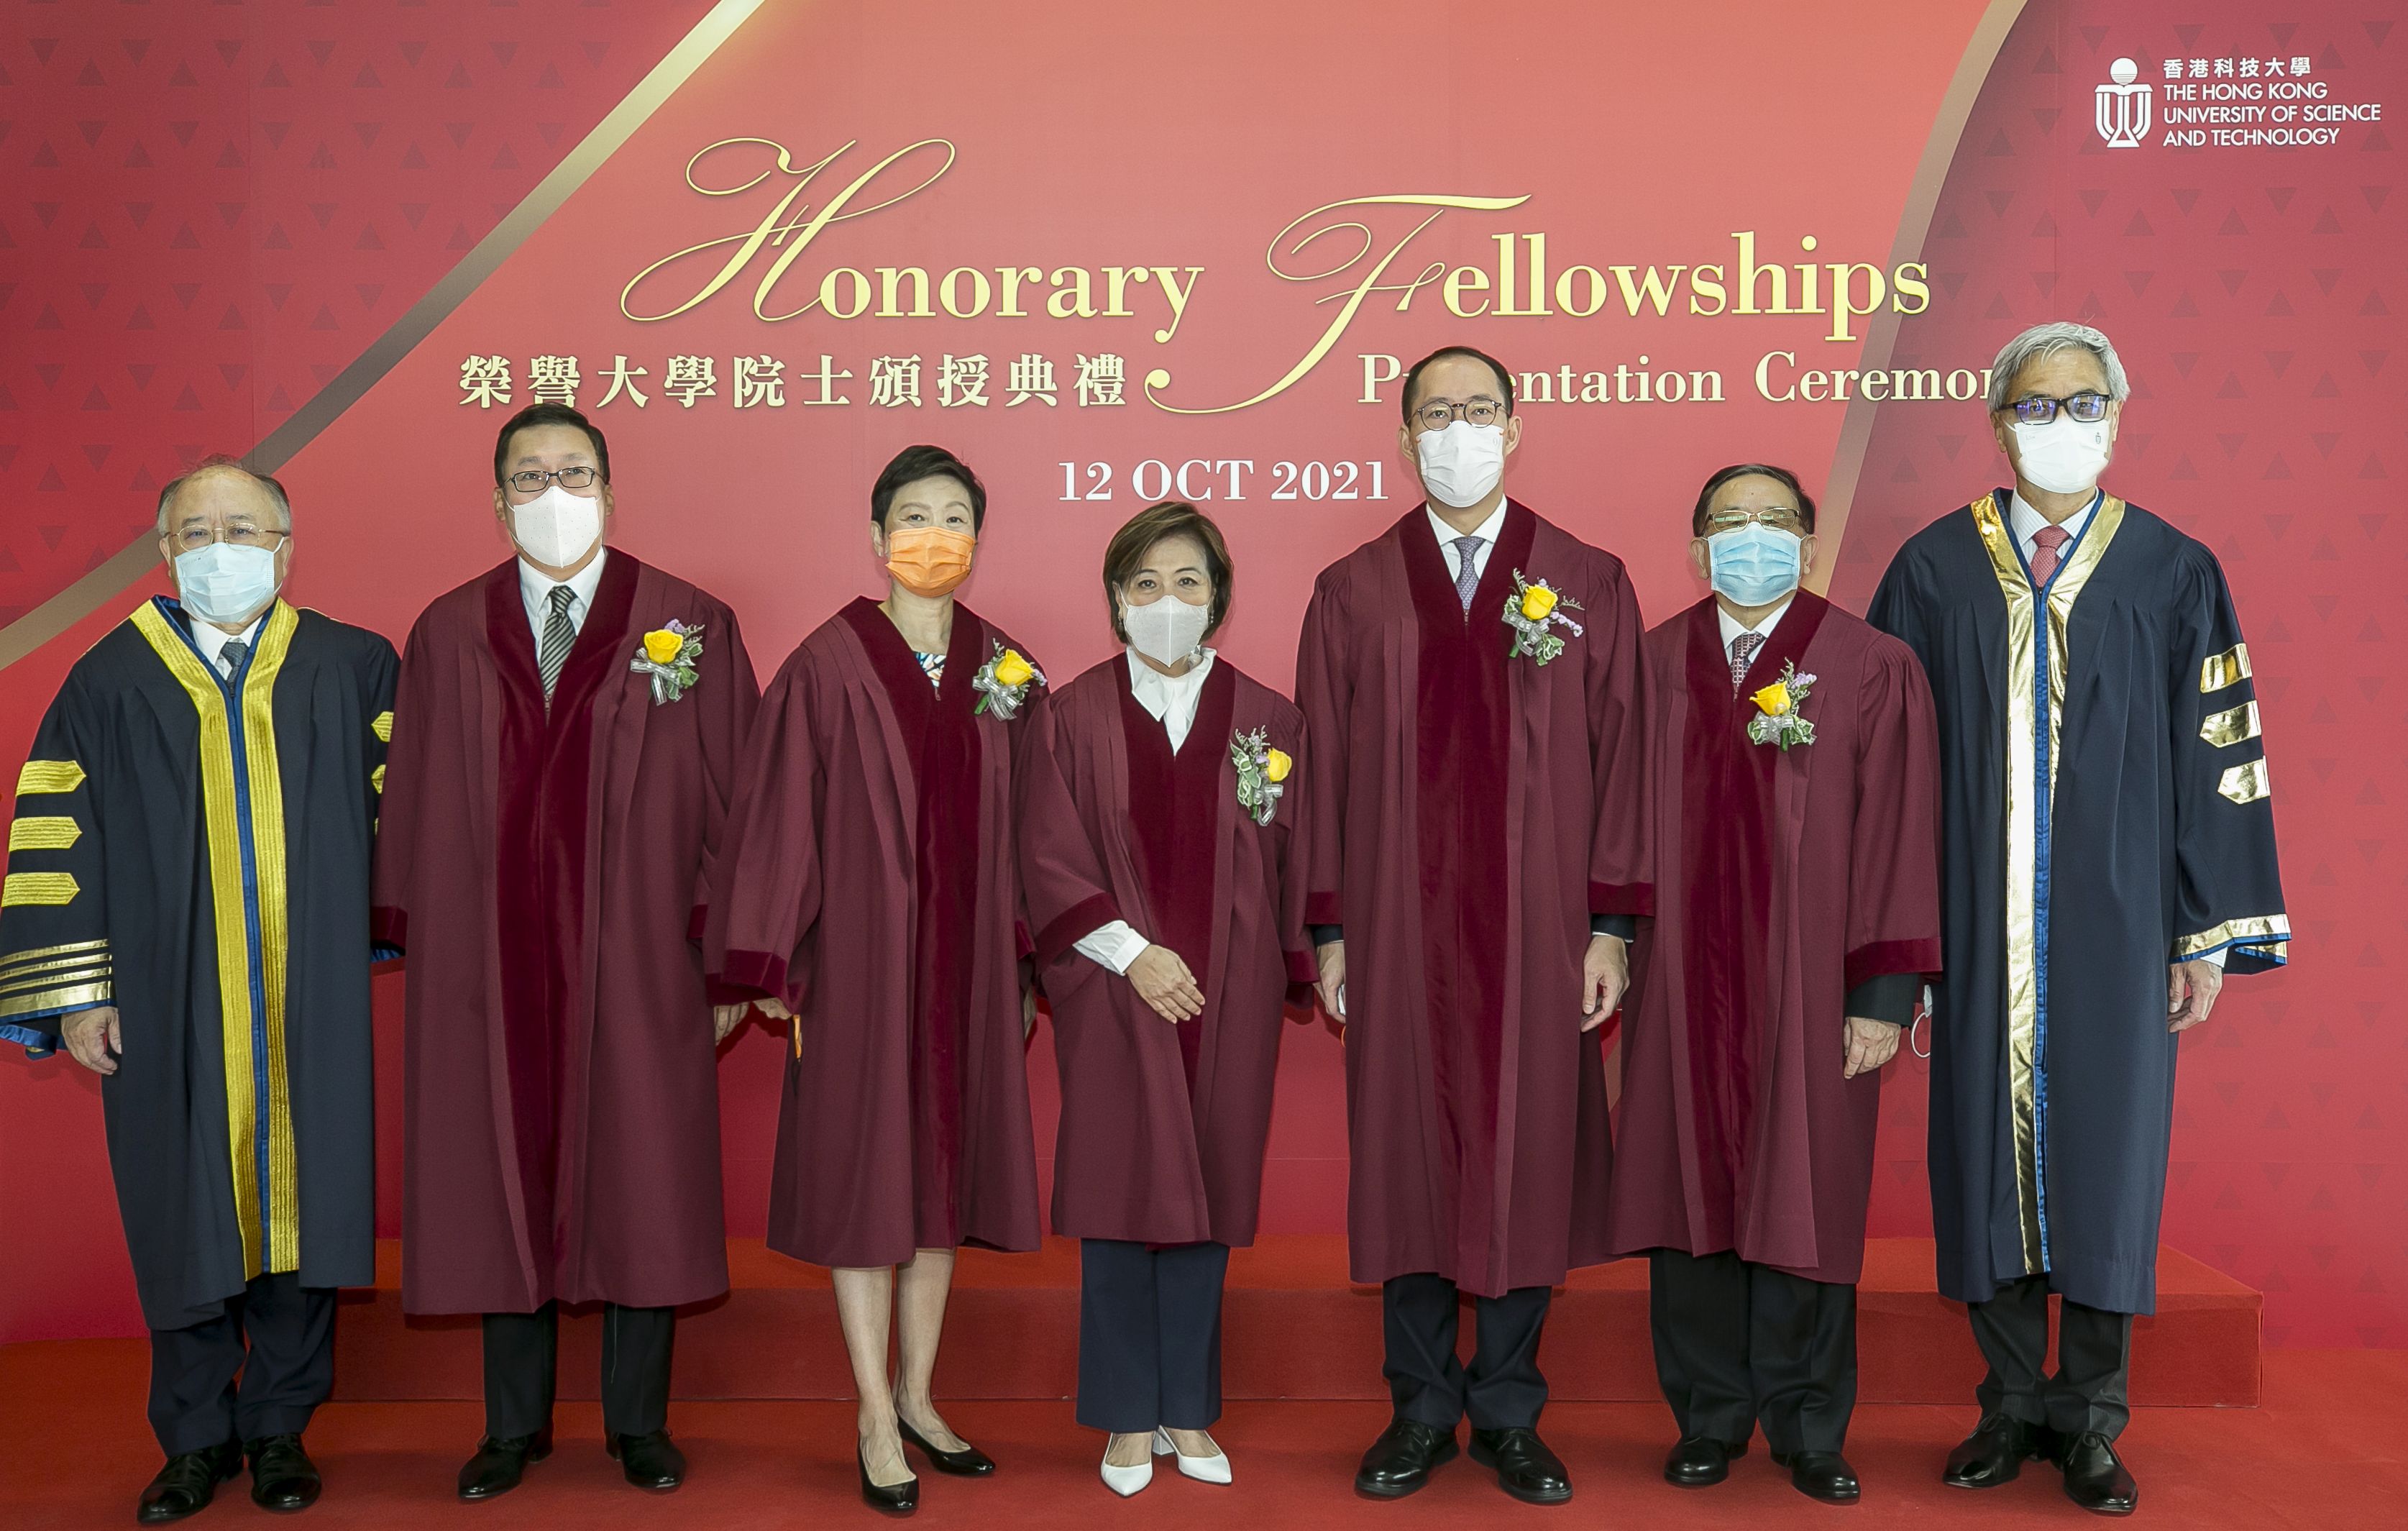 HKUST Honorary Fellowship